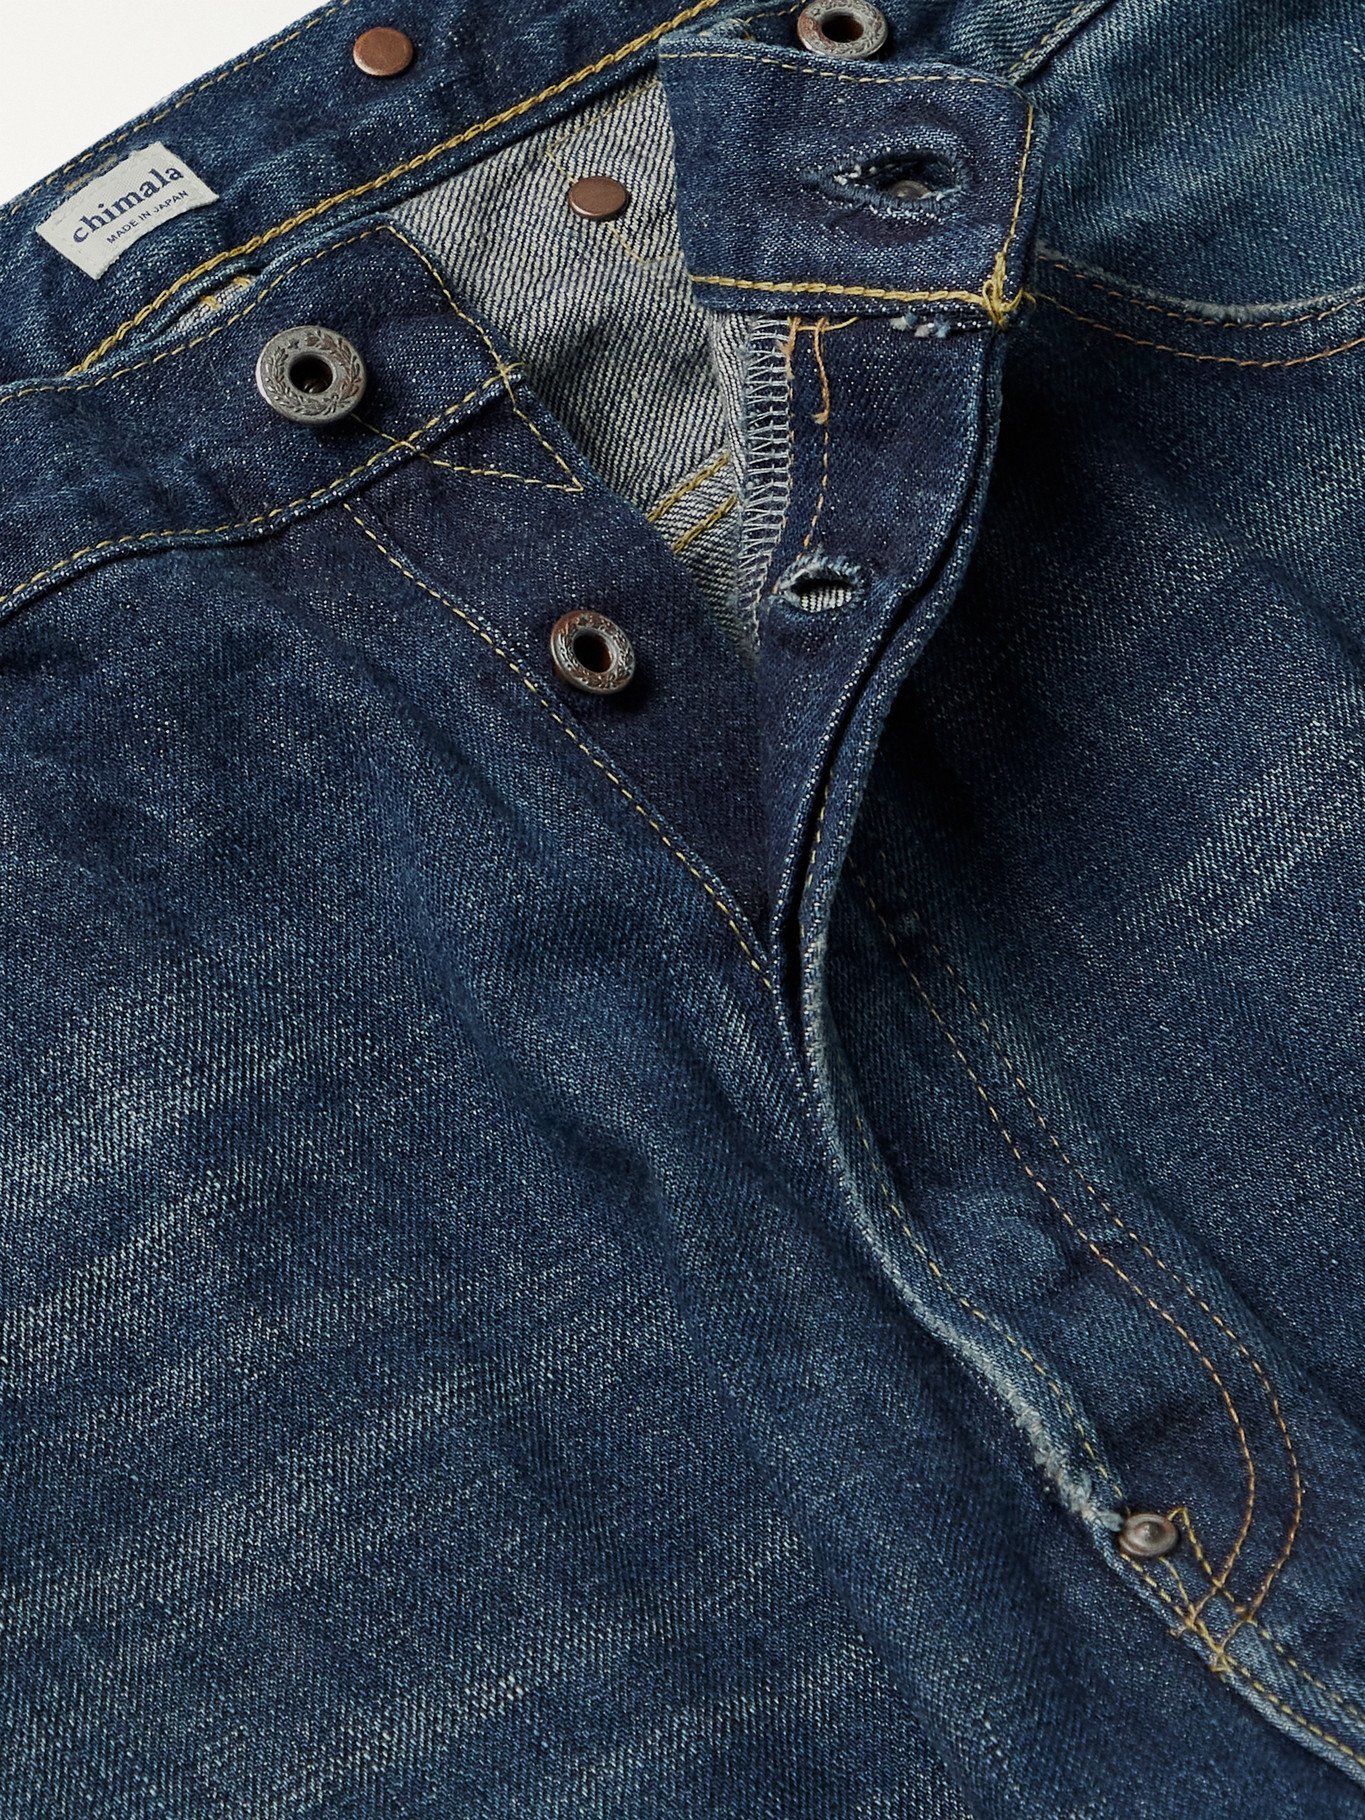 CHIMALA - Distressed Selvedge Denim Jeans - Blue - 28 Chimala